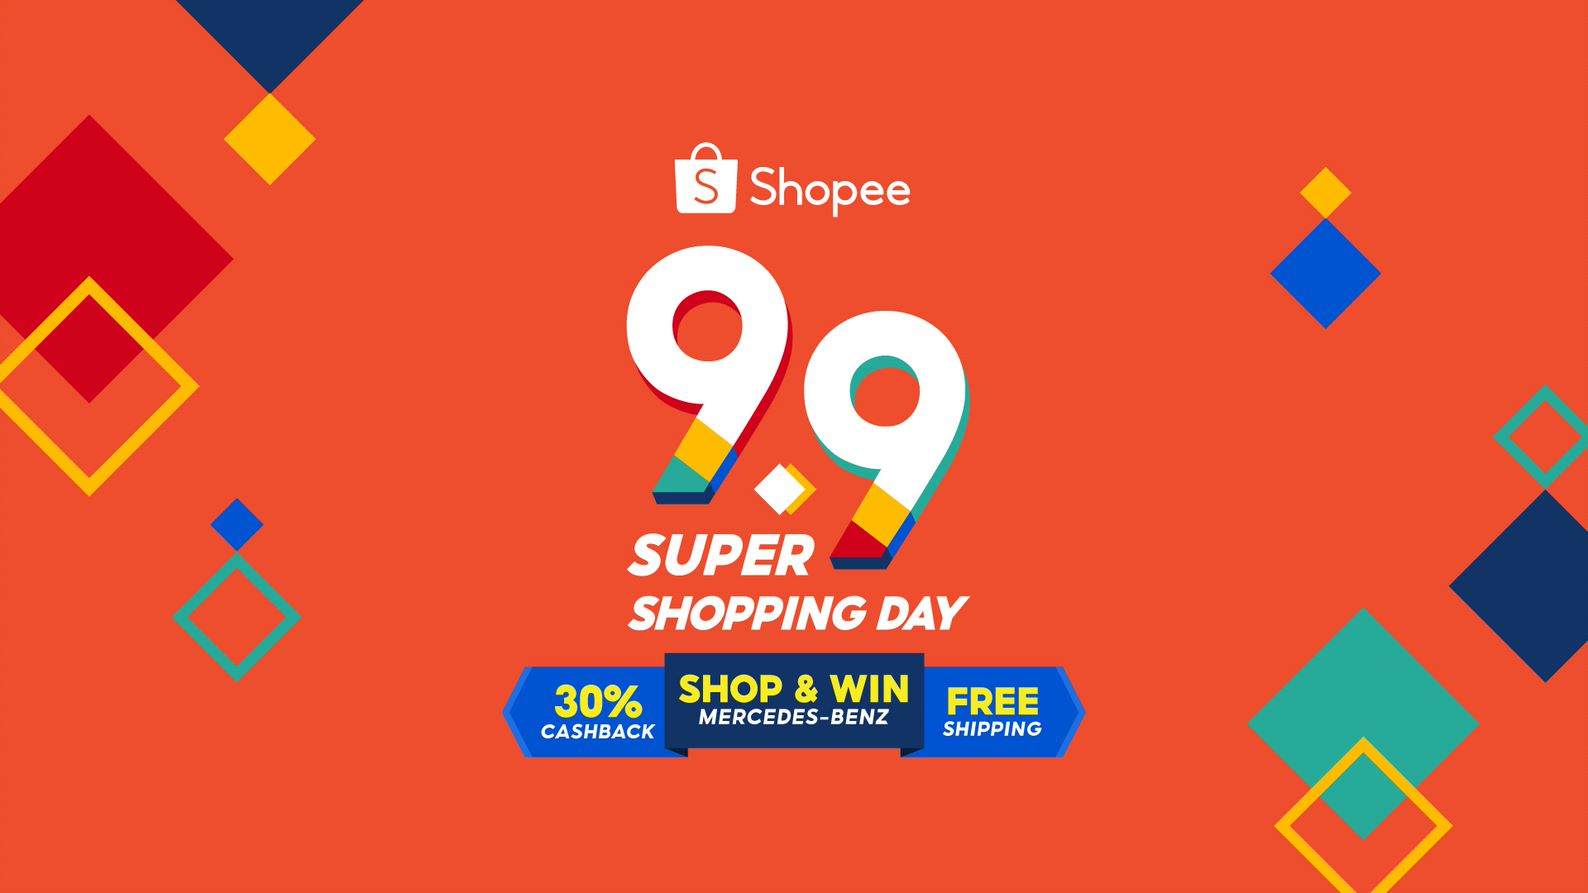 Shopee 9.9 Super Shopping Day 2021